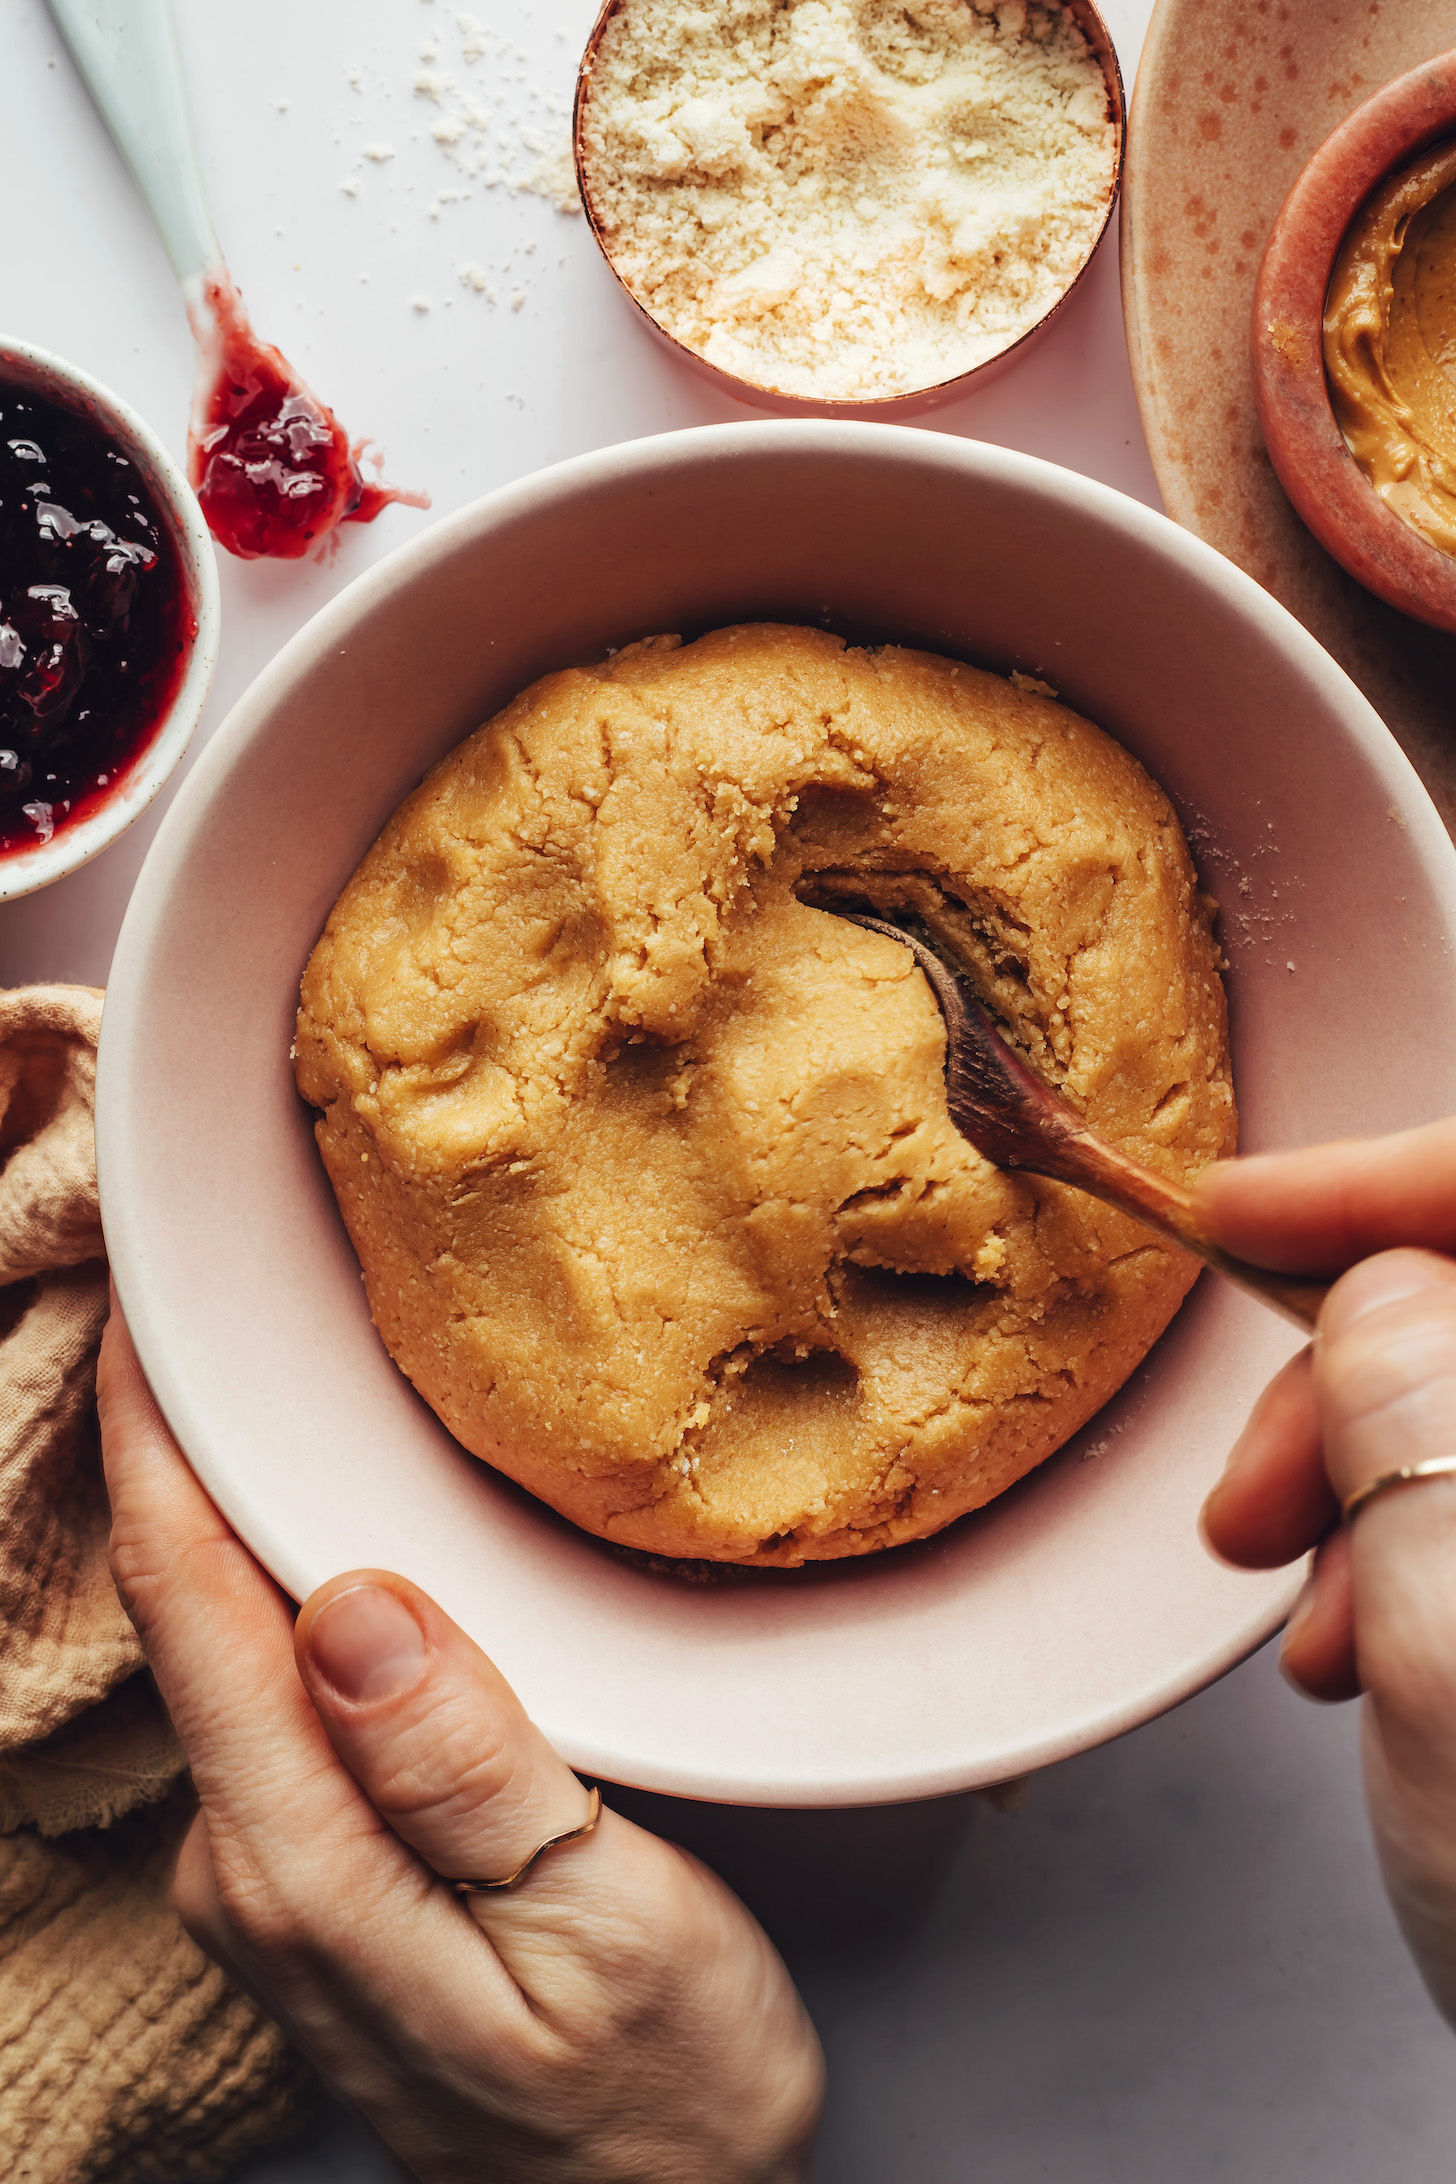 Spoon gluten-free peanut butter thumbprint cookie dough into a bowl